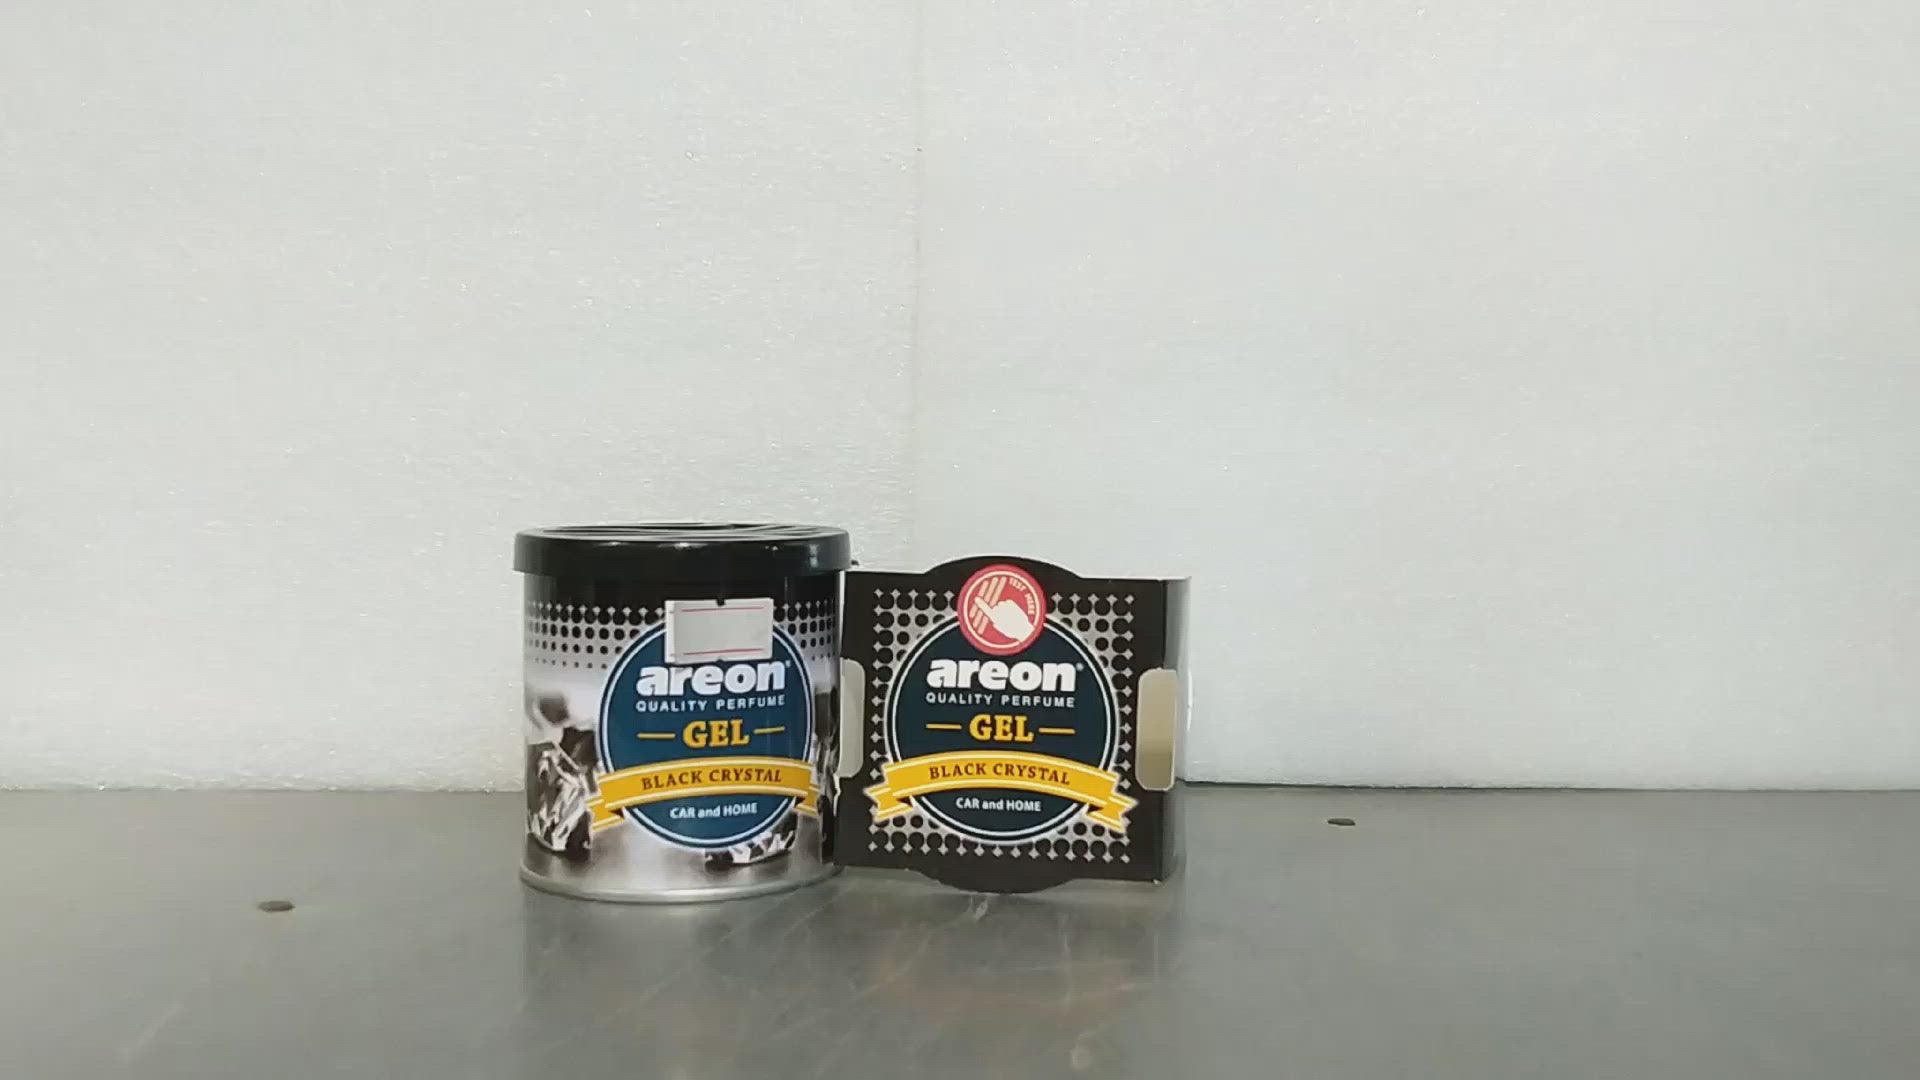  areon black crystal gel areon gel review areon gel uses areon gel price areon gel new car areon gel price in pakistan